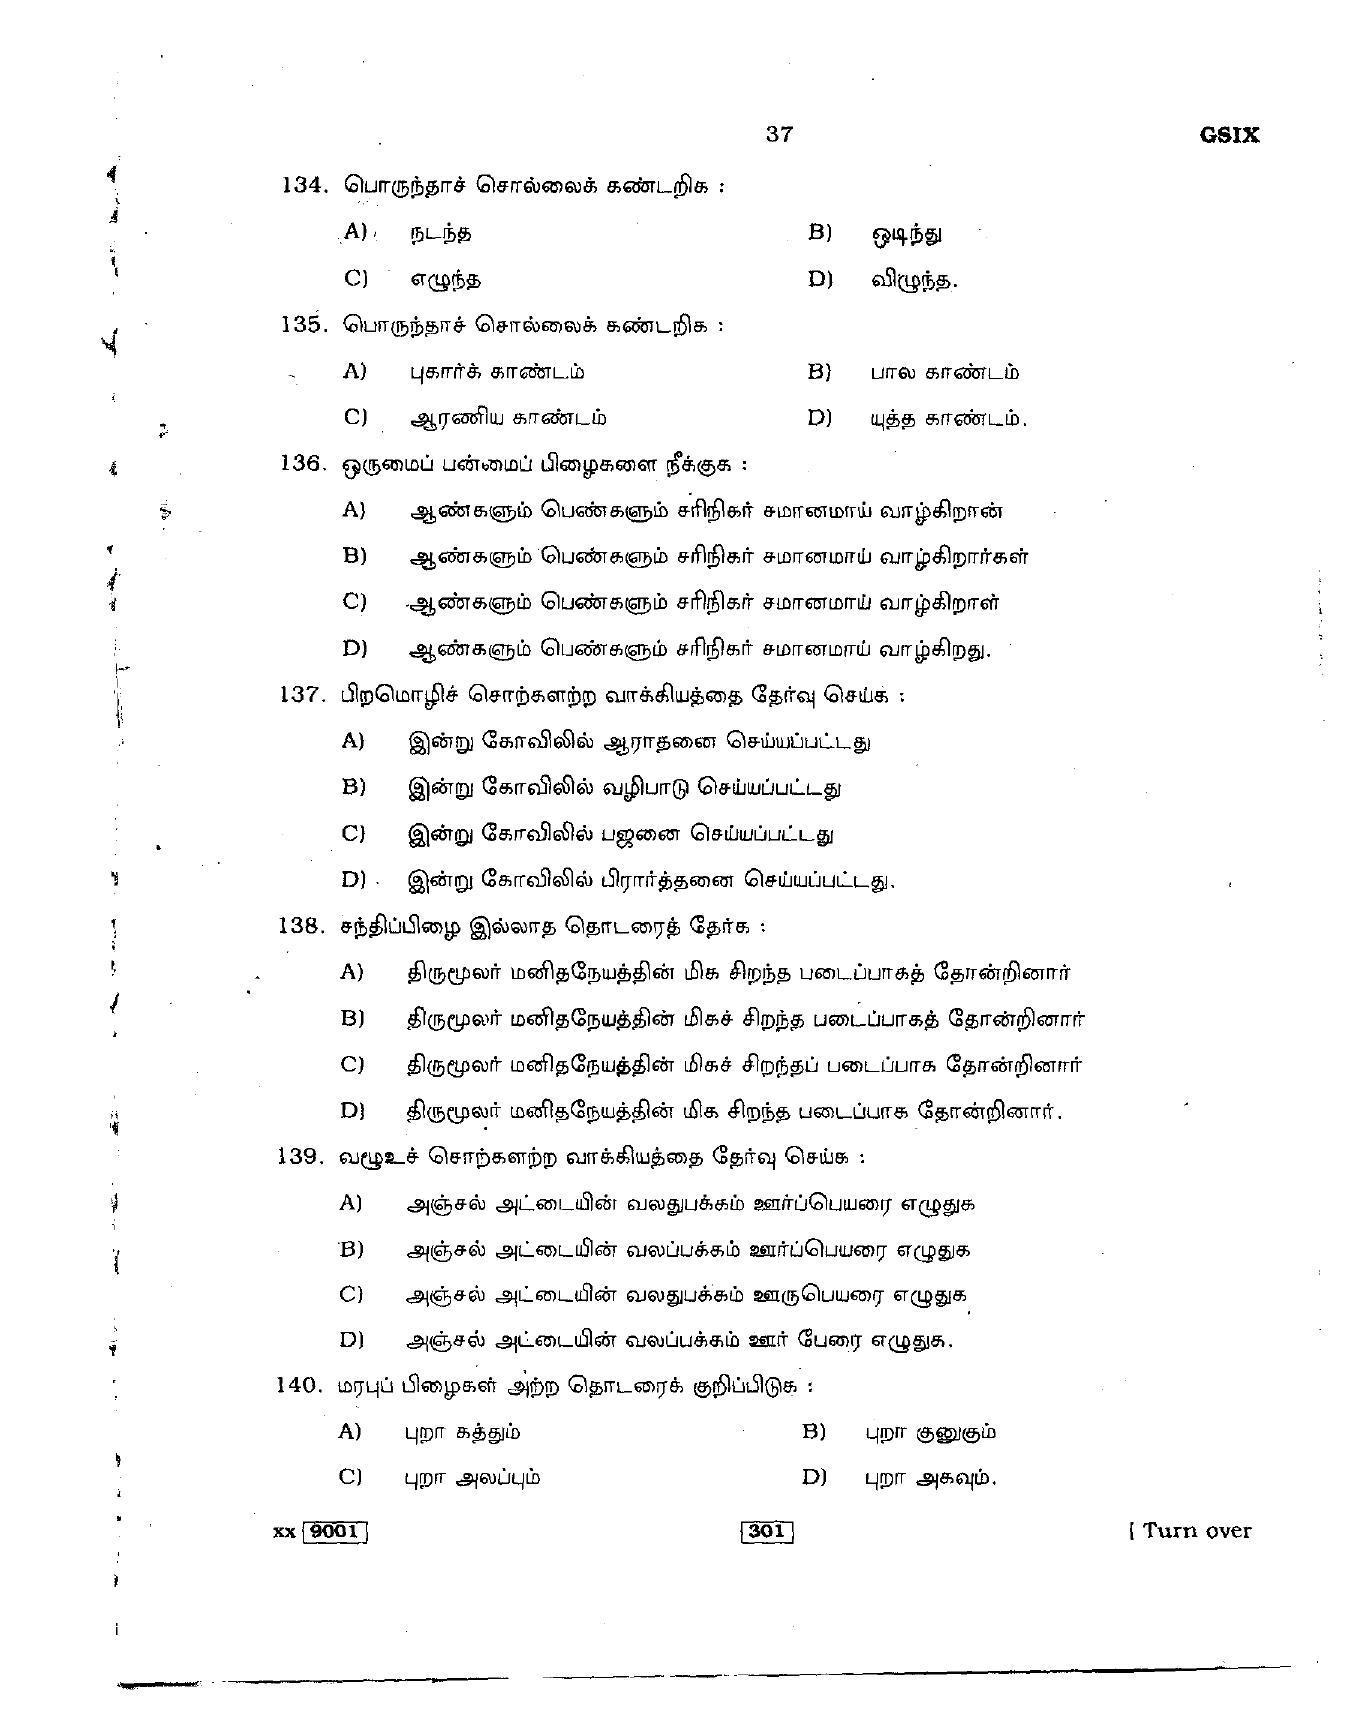 Delhi High Court Junior Judicial Assistant General Knowledge Previous Question Paper - Page 18